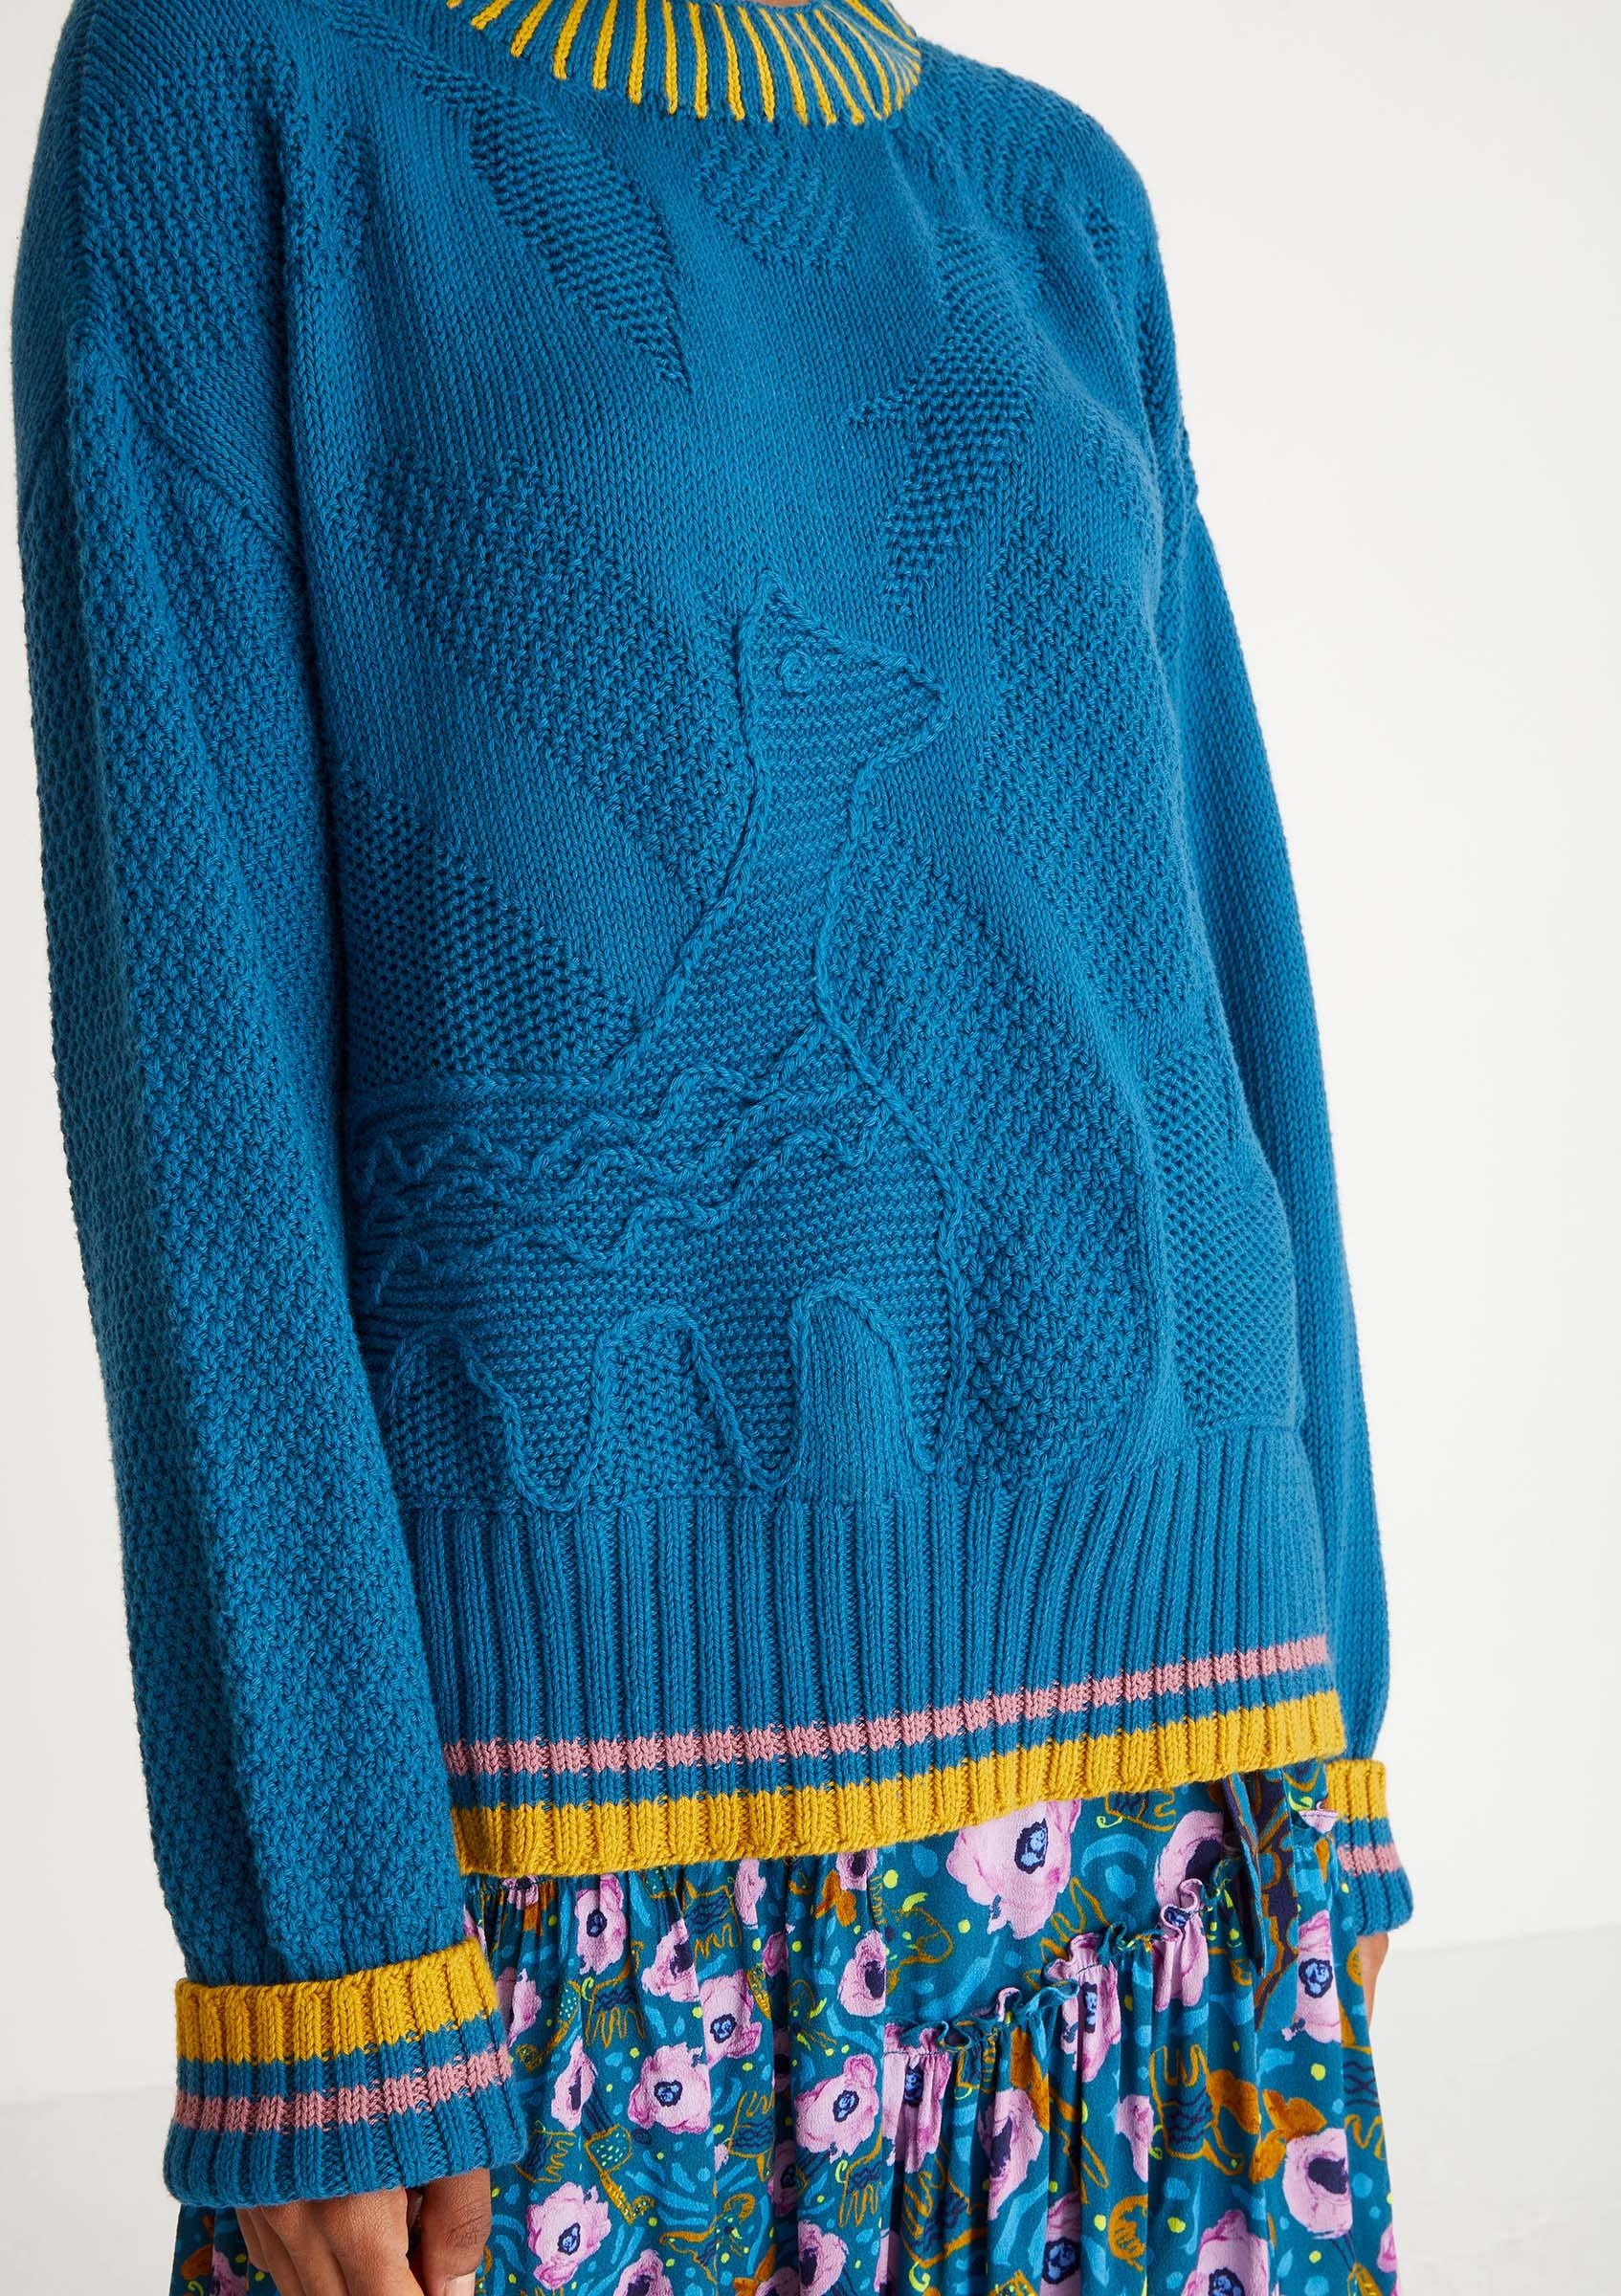 The Amy Sweater - Women's Oversized Knit Sweater – Alivia